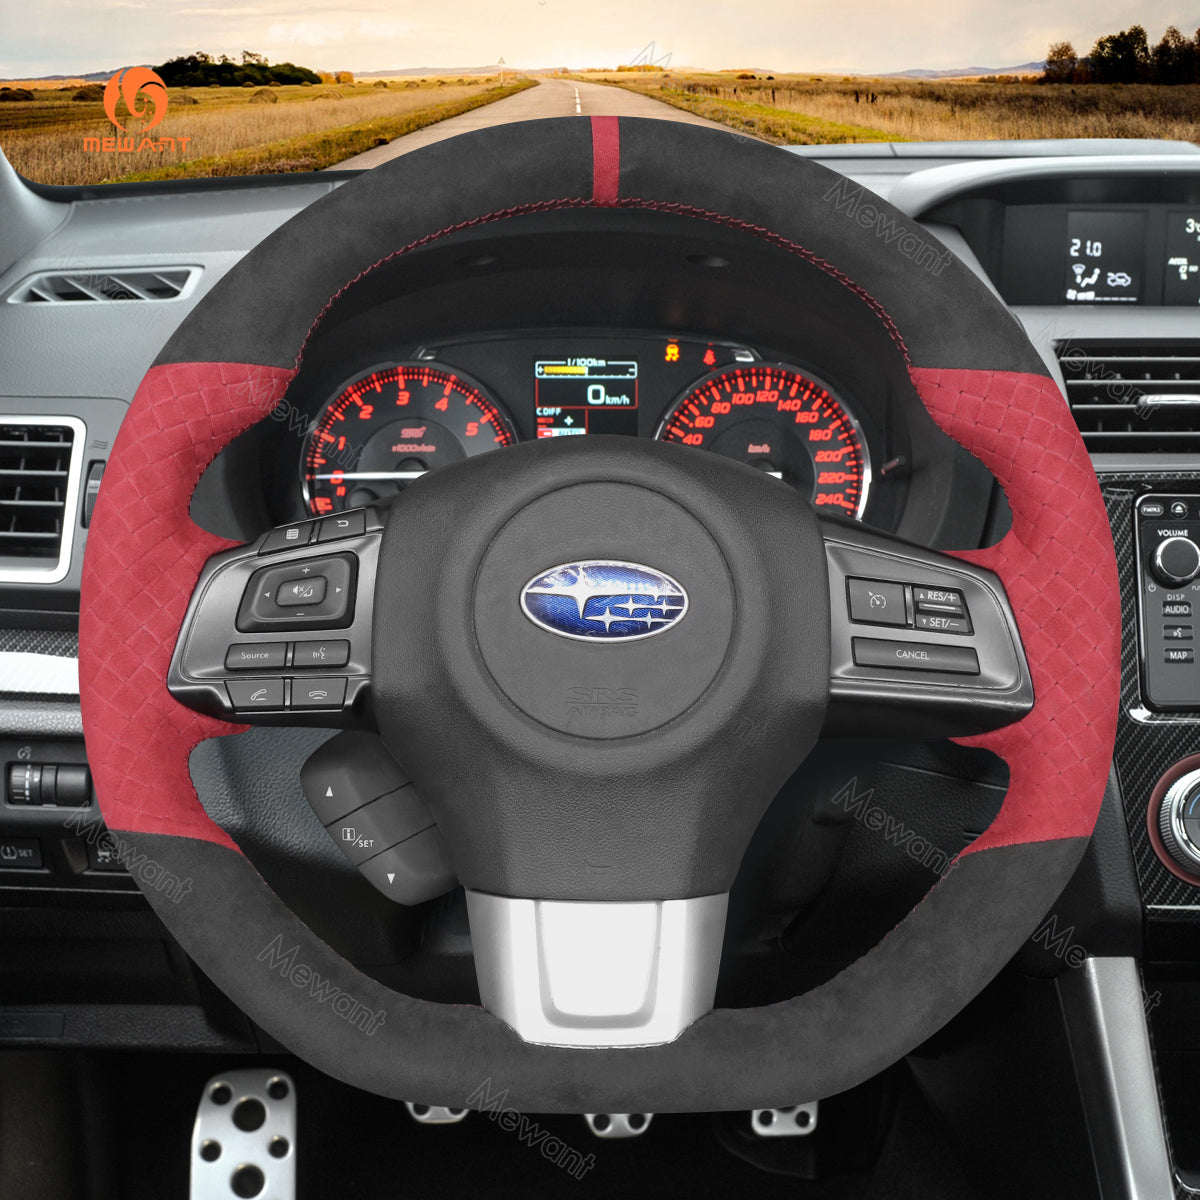 MEWANT protector para volante de coche de gamuza de cuero negro de fibra de carbono cosido a mano para Subaru WRX (STI) Levorg 2015-2019